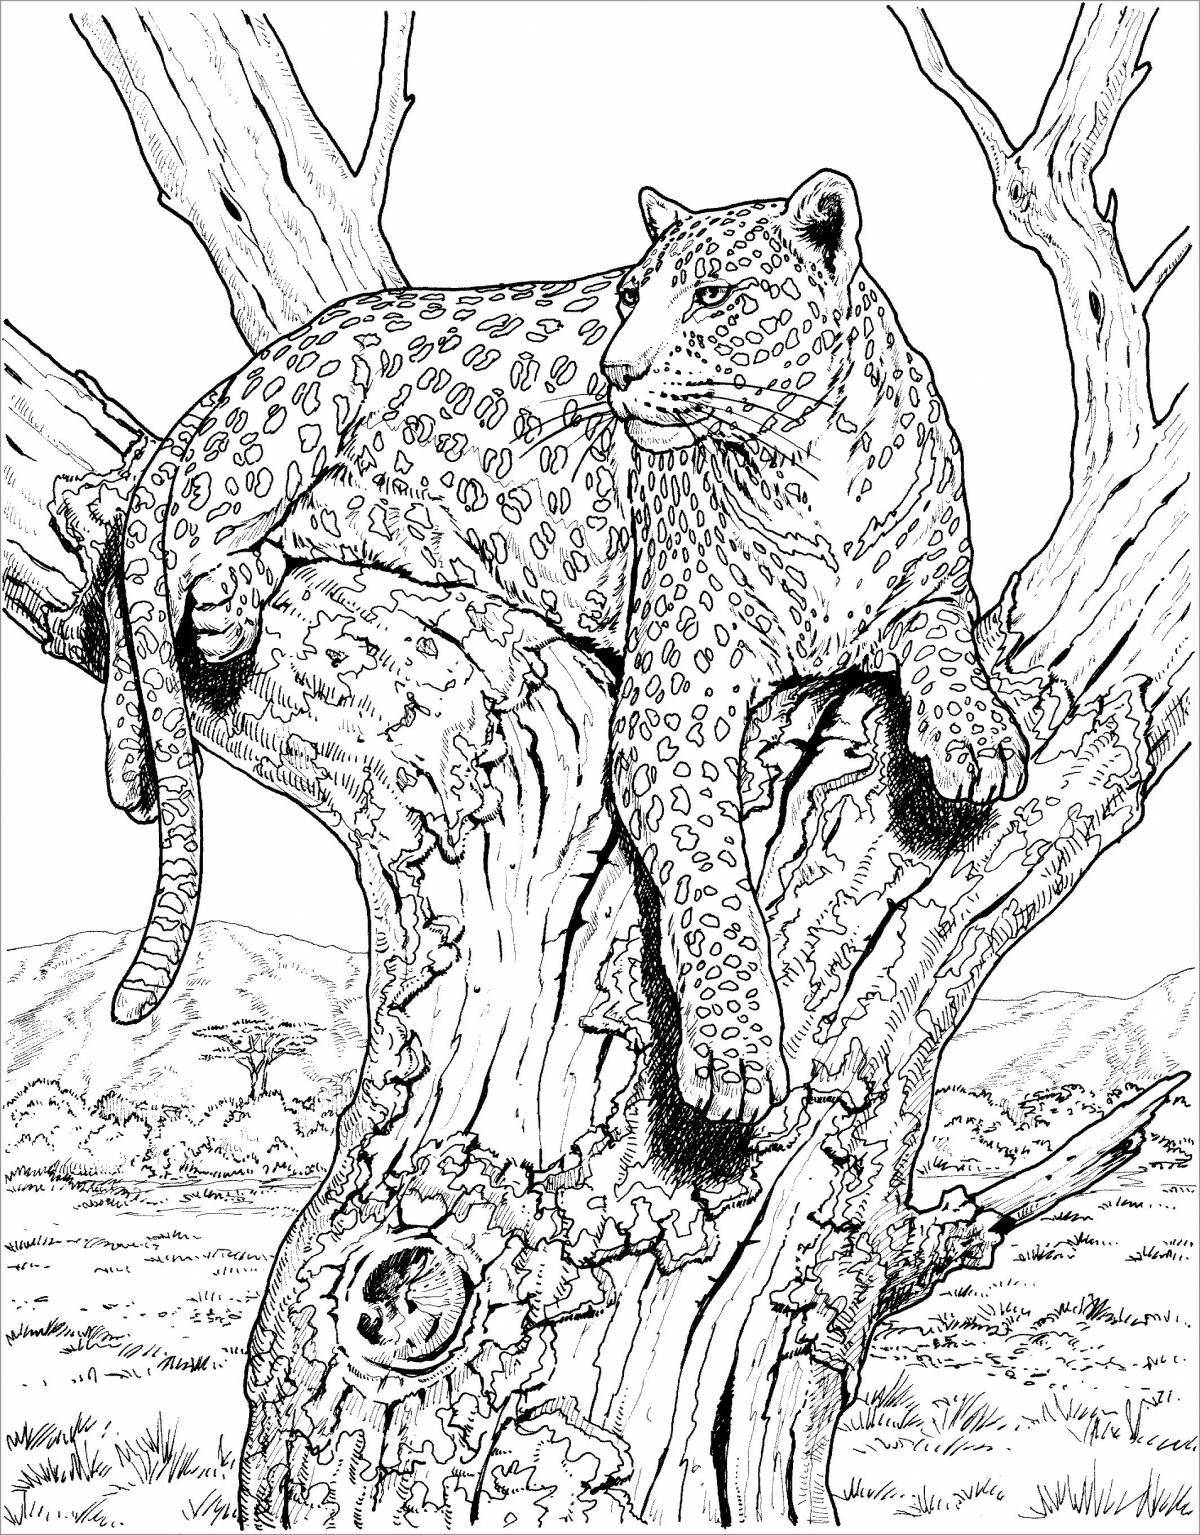 Adorable leopard cat coloring book